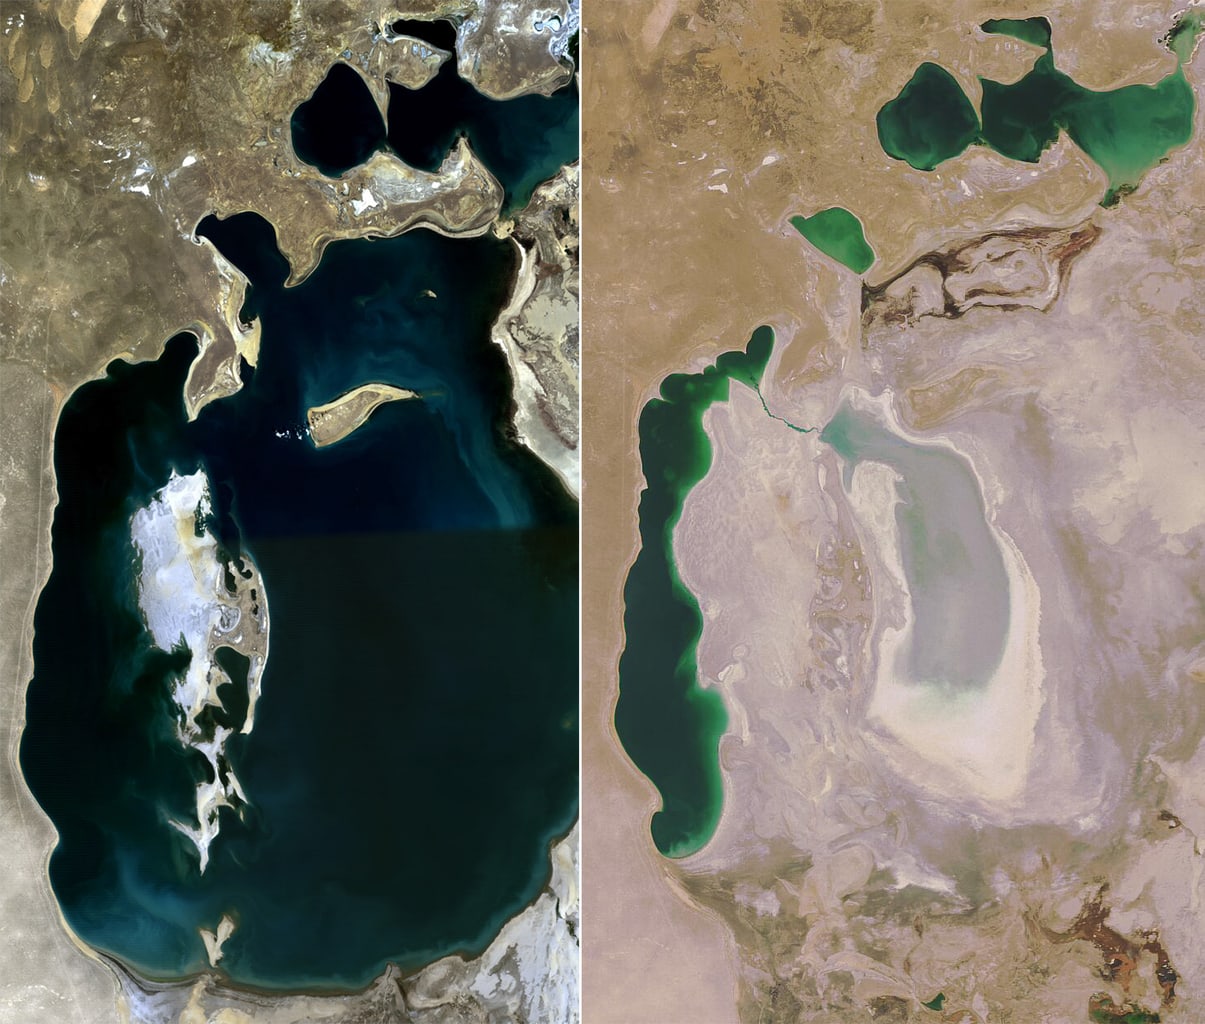 Aral_Sea_1989-2008 (Wikimedia Commons)